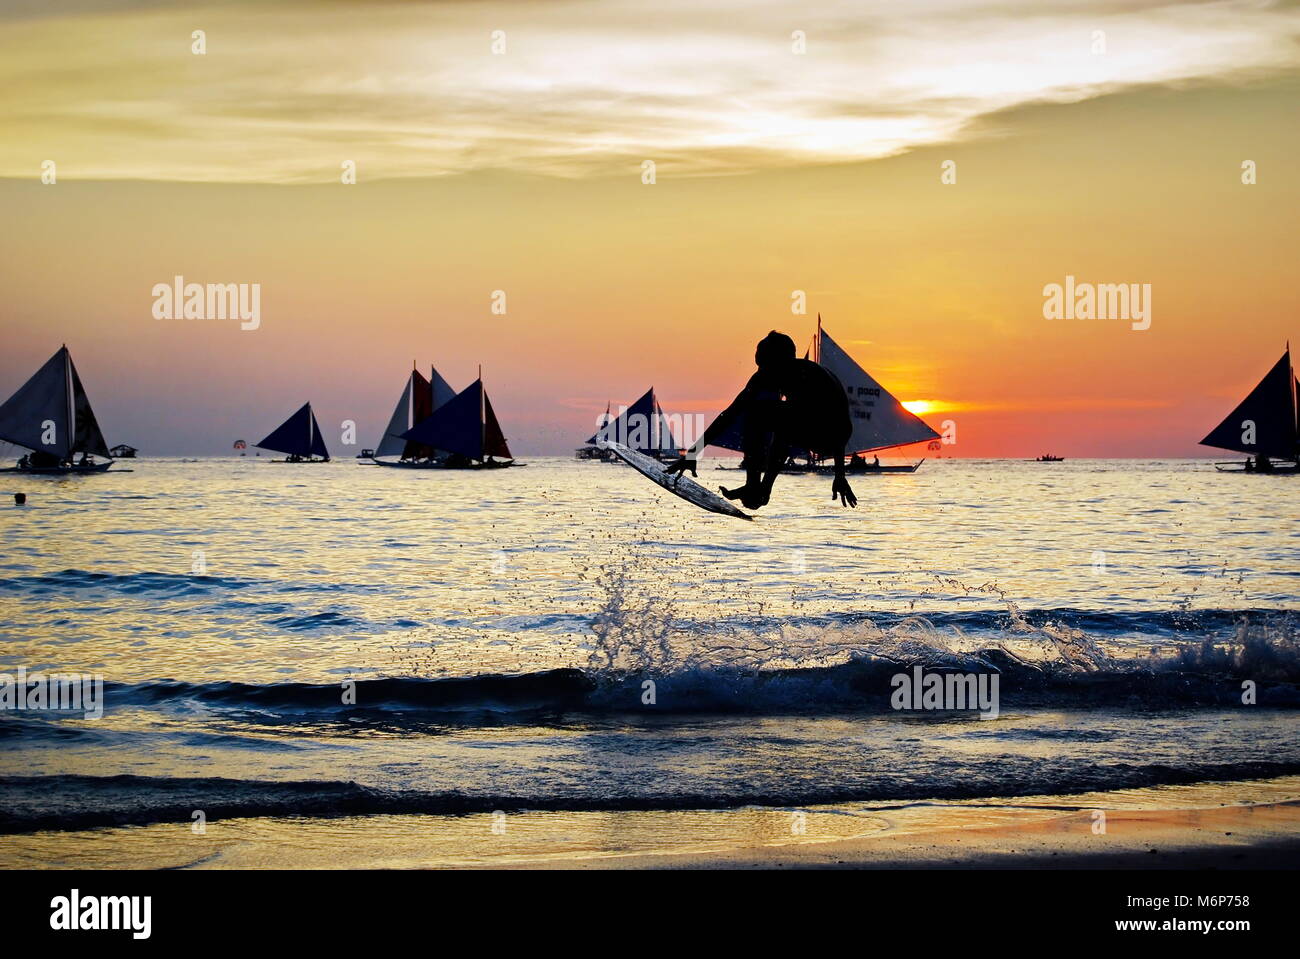 skimborder and skimboarders skimboarding at sunset, surfer silhuete  surfing Stock Photo